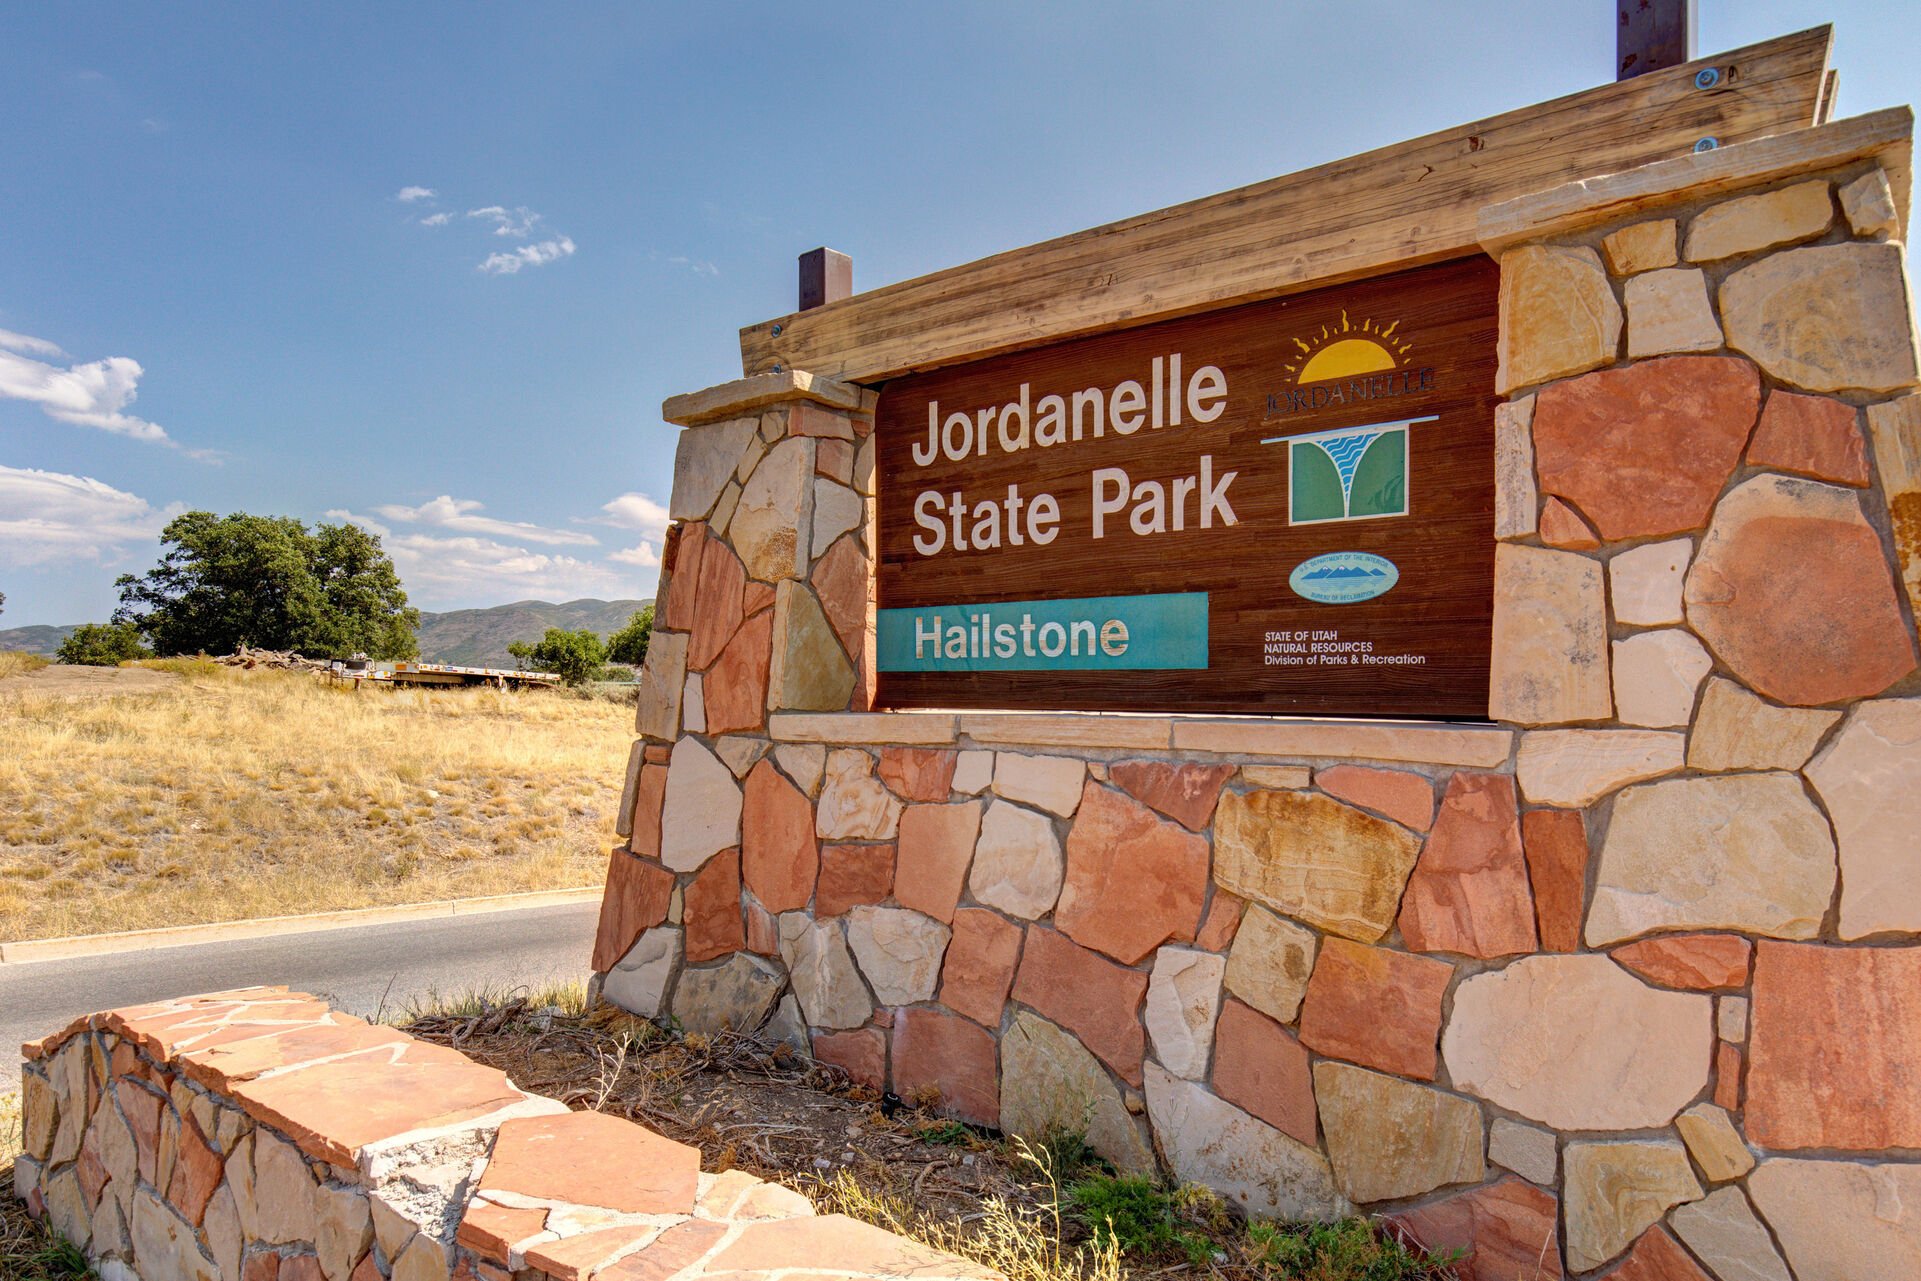 Jordanelle State Park is Just a 1/2 Mile Away